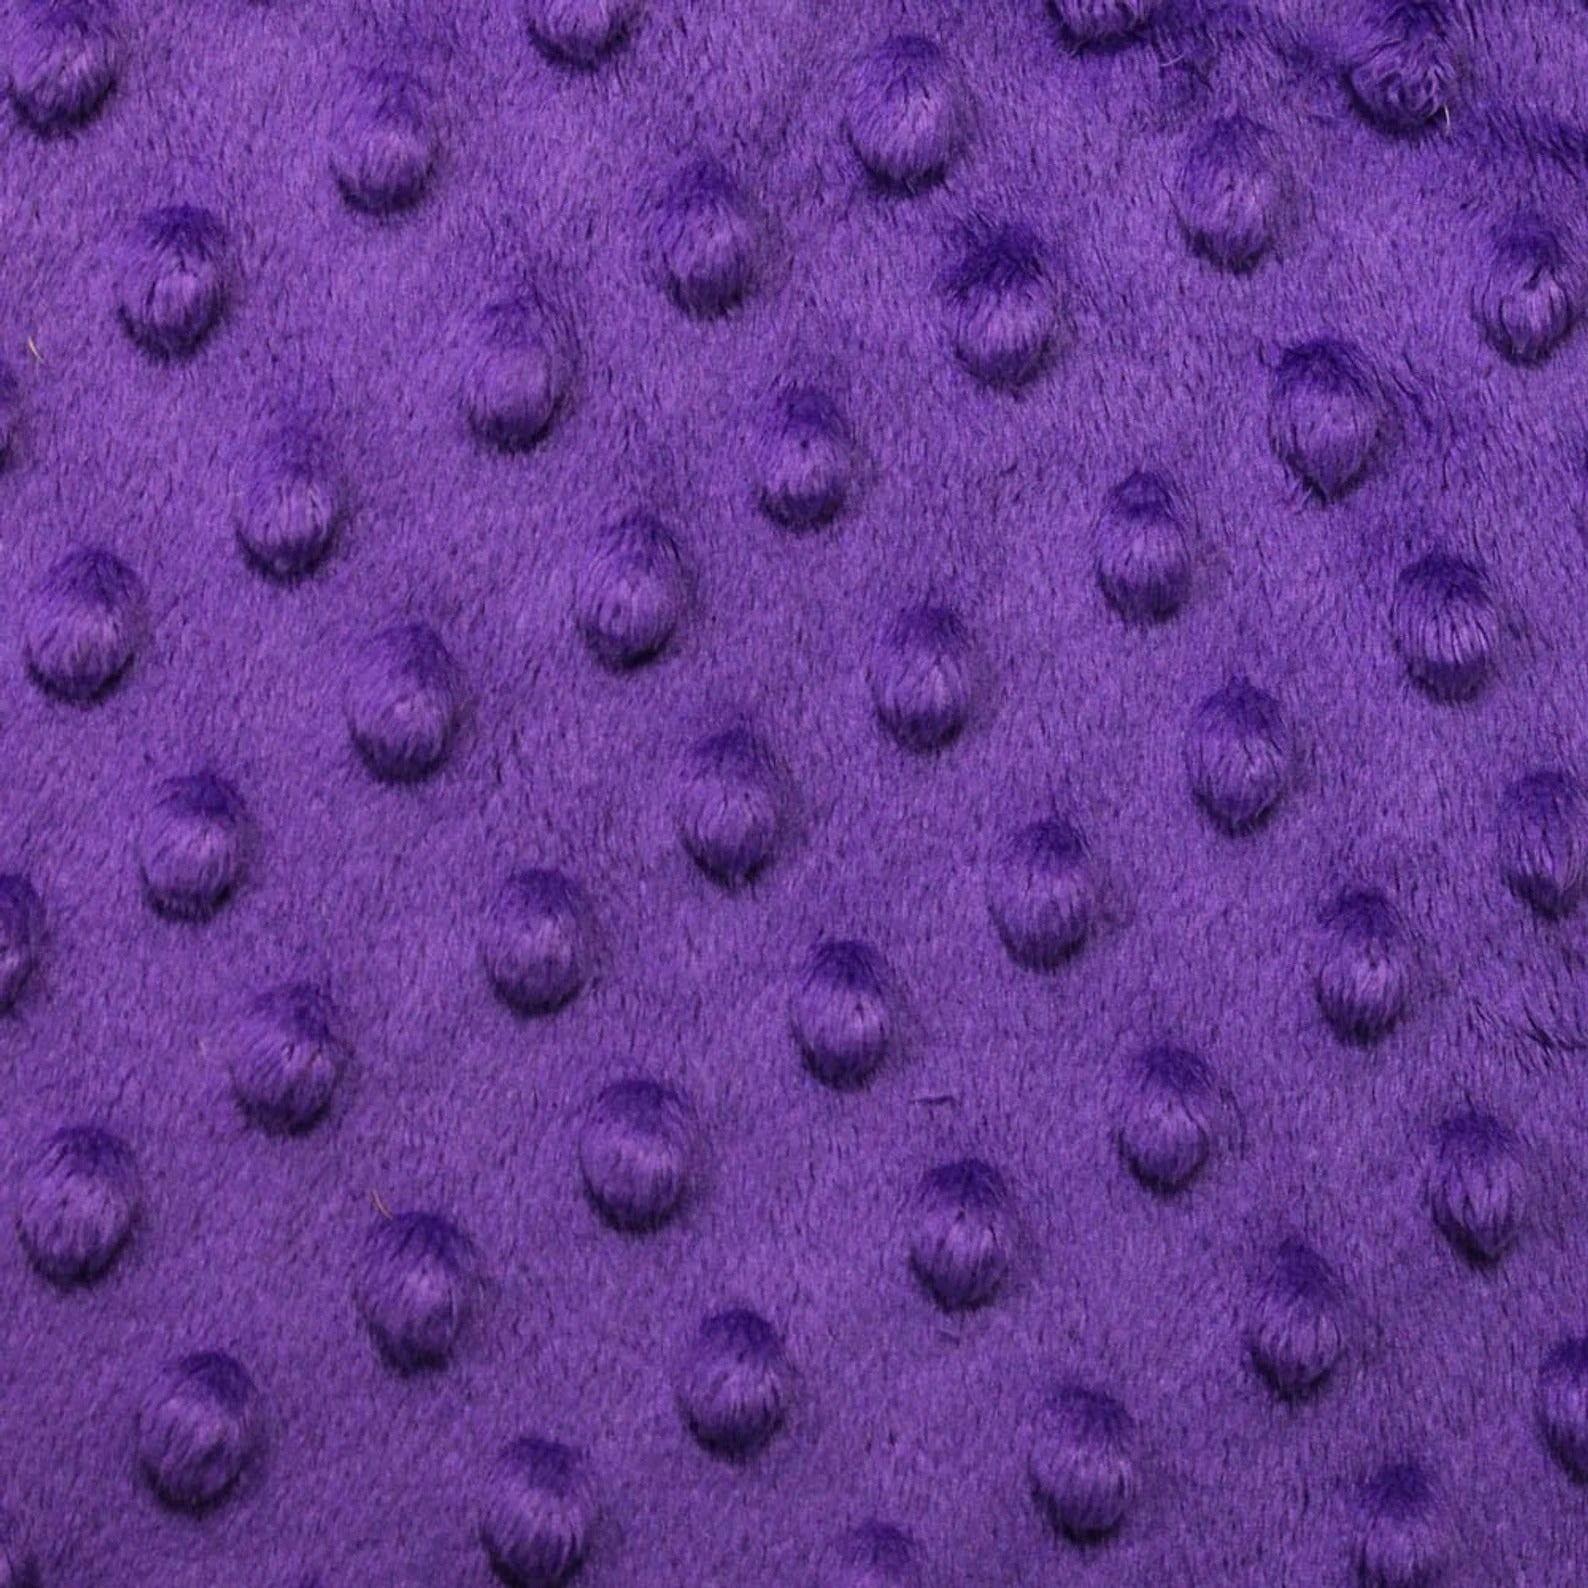 Bubble Polka Dot Minky Fabric By The Roll (20 Yards) Wholesale FabricMinkyICEFABRICICE FABRICSPurpleBy The Roll (60" Wide)Bubble Polka Dot Minky Fabric By The Roll (20 Yards) Wholesale Fabric ICEFABRIC Purple